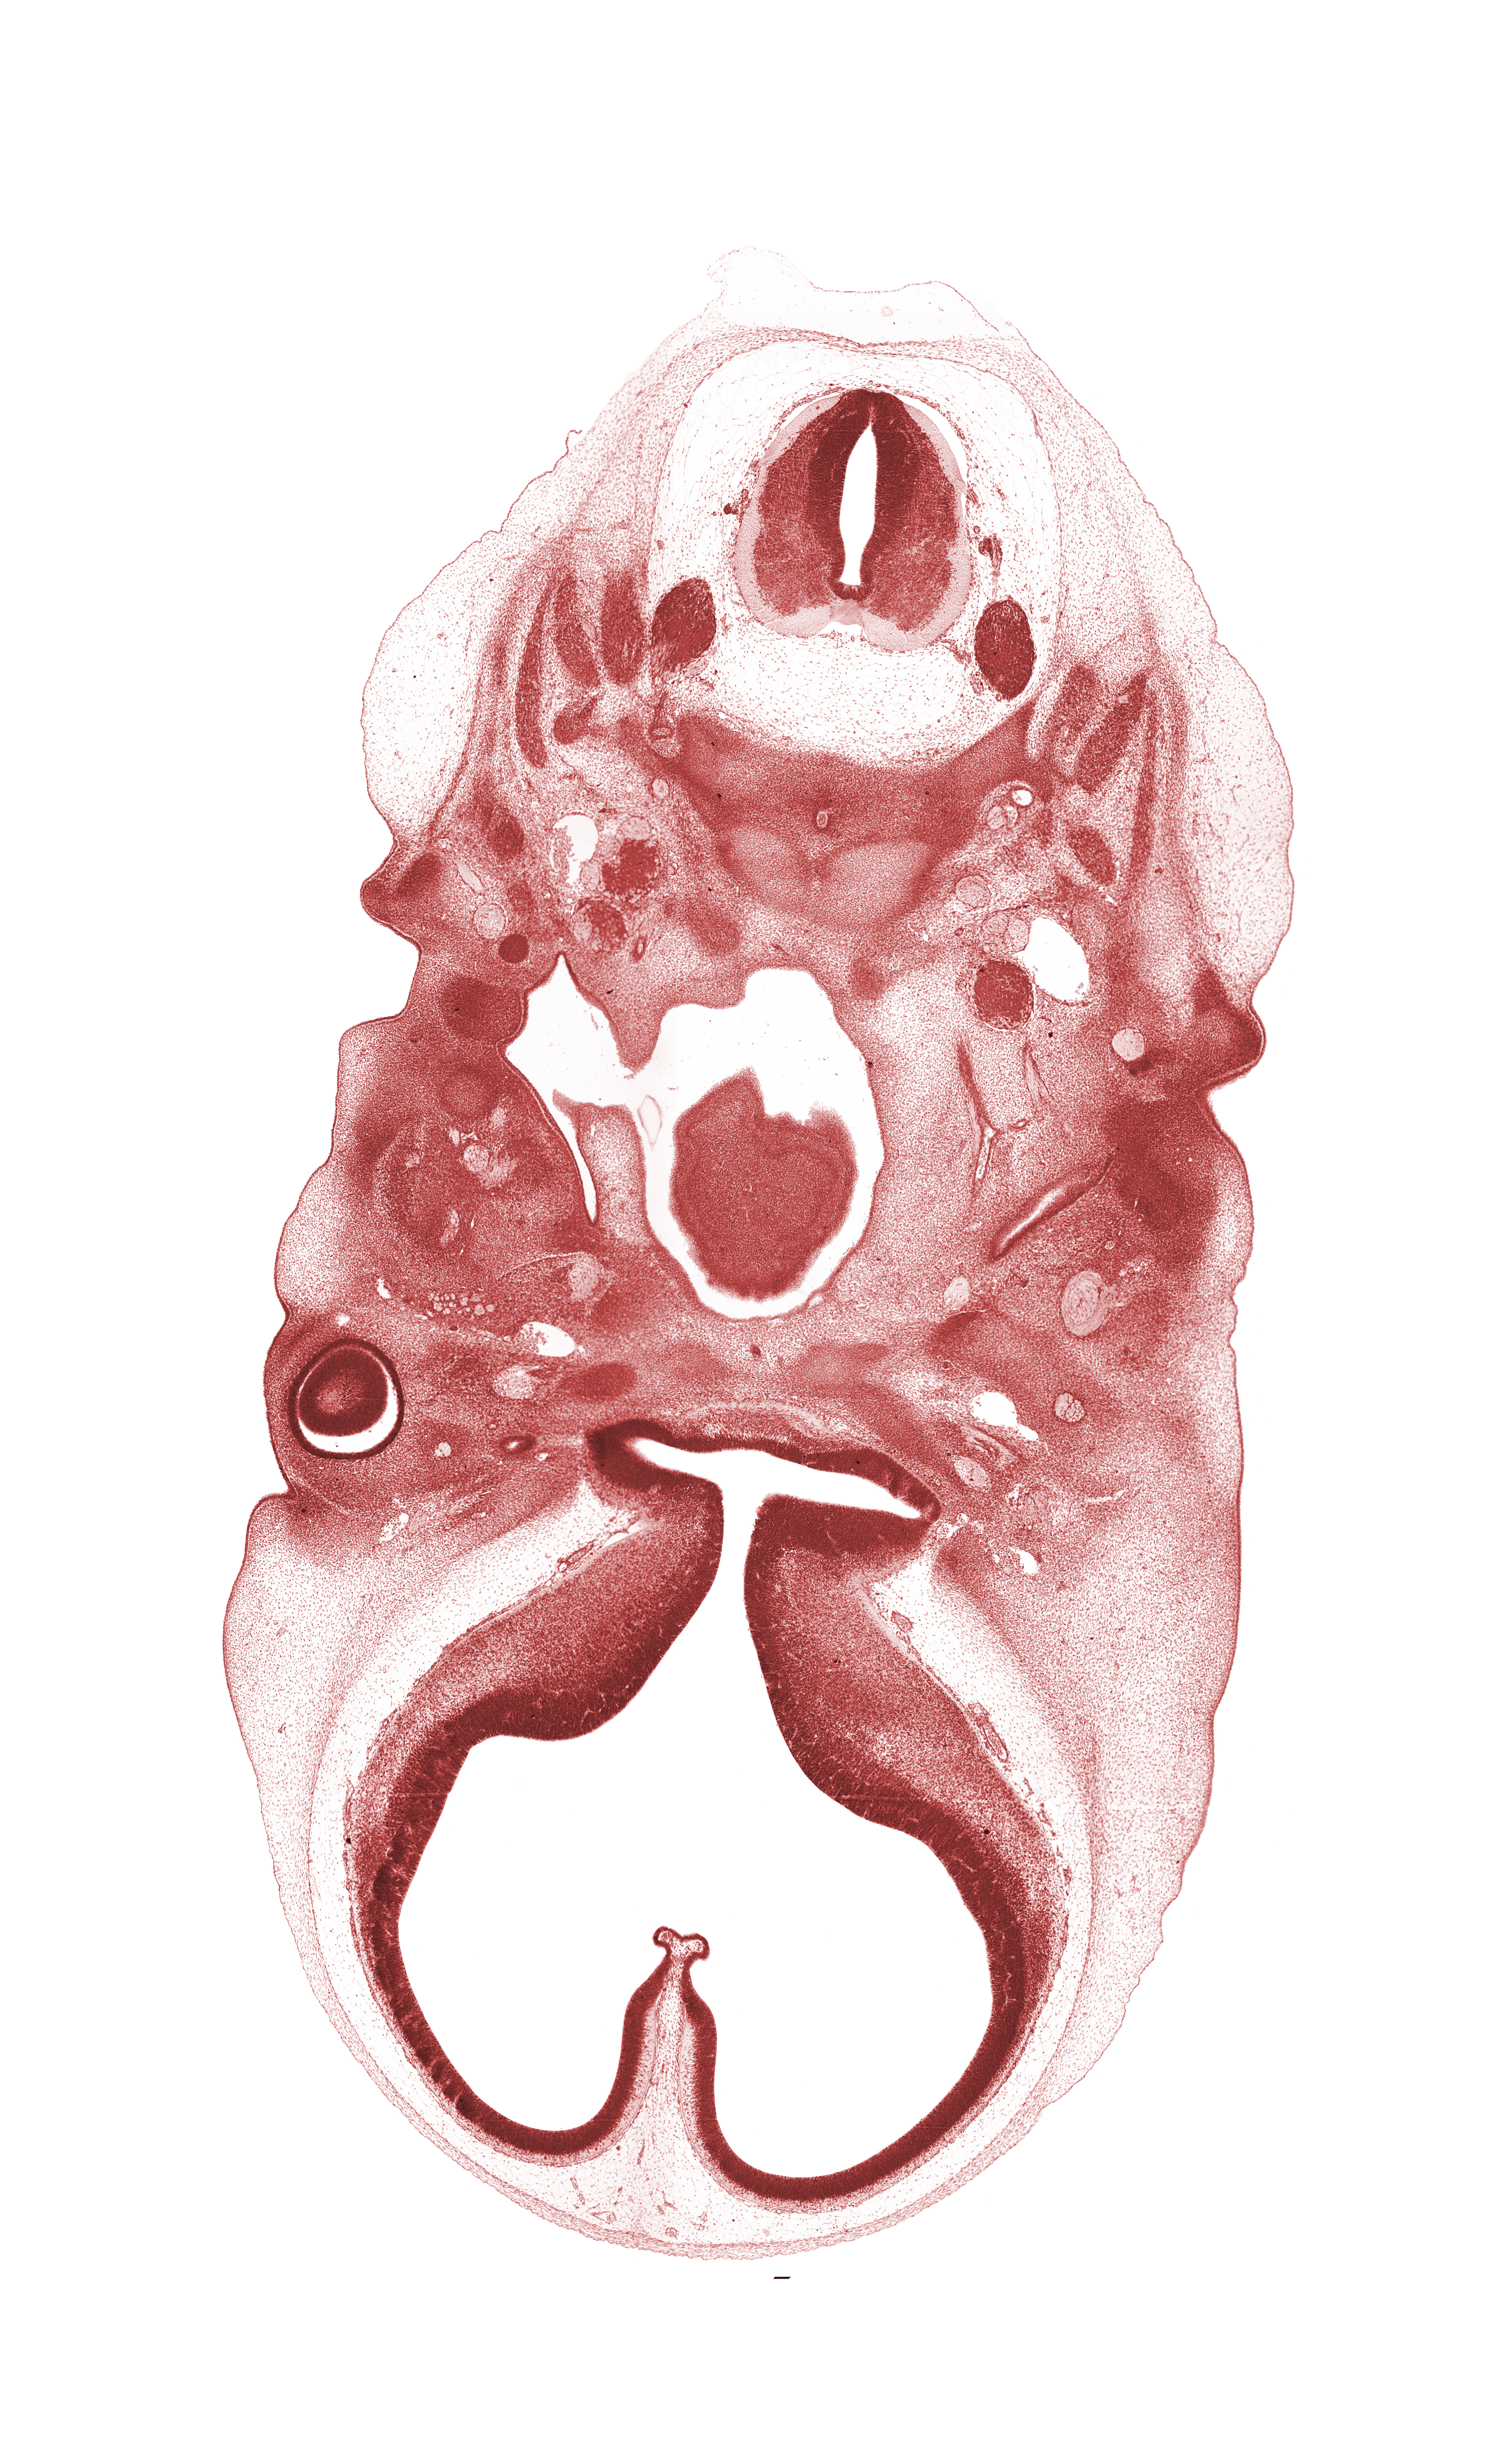 C-1 spinal nerve, C-1 vertebra (atlas), C-2 spinal ganglion, C-2 ventral root, atlanto-occipital joint, auricle, basi-occipital (basal plate), dens of C-2 vertebra (axis) region, edge of tongue, facial nerve (CN VII), falx cerebri region, head mesenchyme, hippocampal thickening, interventricular foramen, lateral ventricle, nasopharynx, notochord, optic chiasma (chiasmatic plate), optic groove, optic stalk (CN II), optic ventricle, oropharynx, paraphysis, spinal accessory nerve (CN XI), stem of adenohypophysis, subarachnoid space, third ventricle, vertebral artery